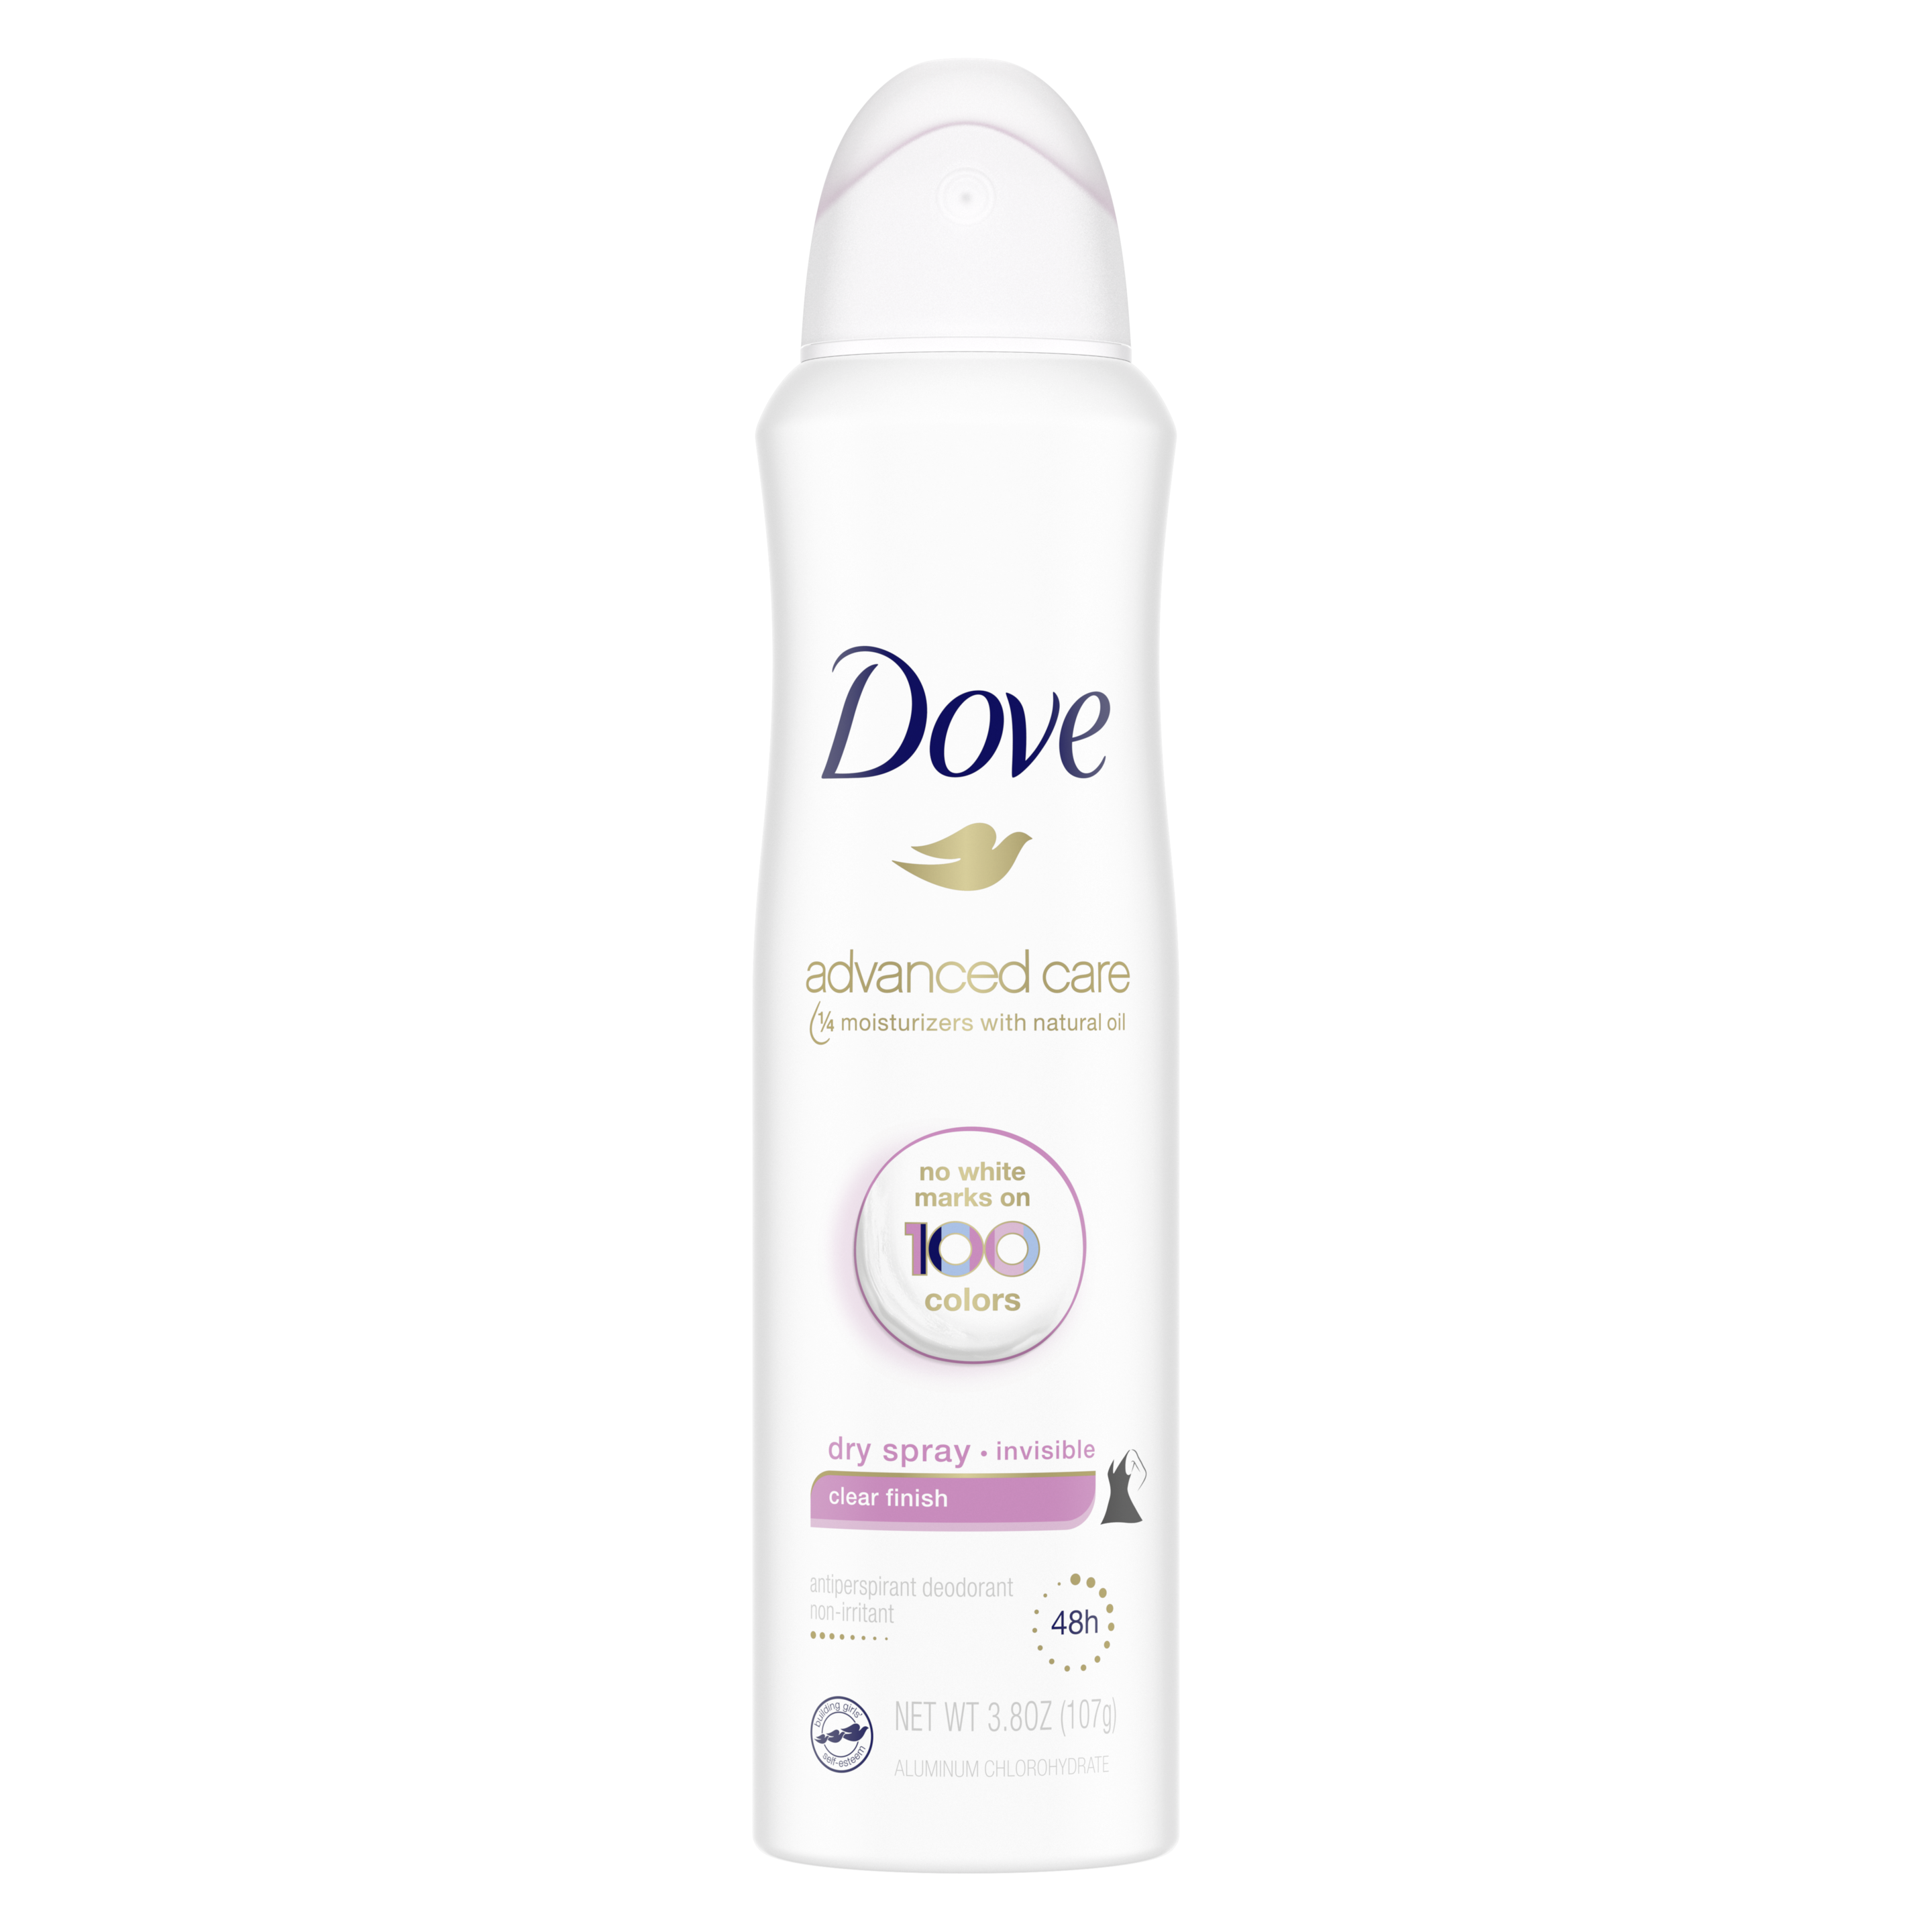 Dove Dry Spray Invisible Antiperspirant Deodorant Clear Finish 3.8oz